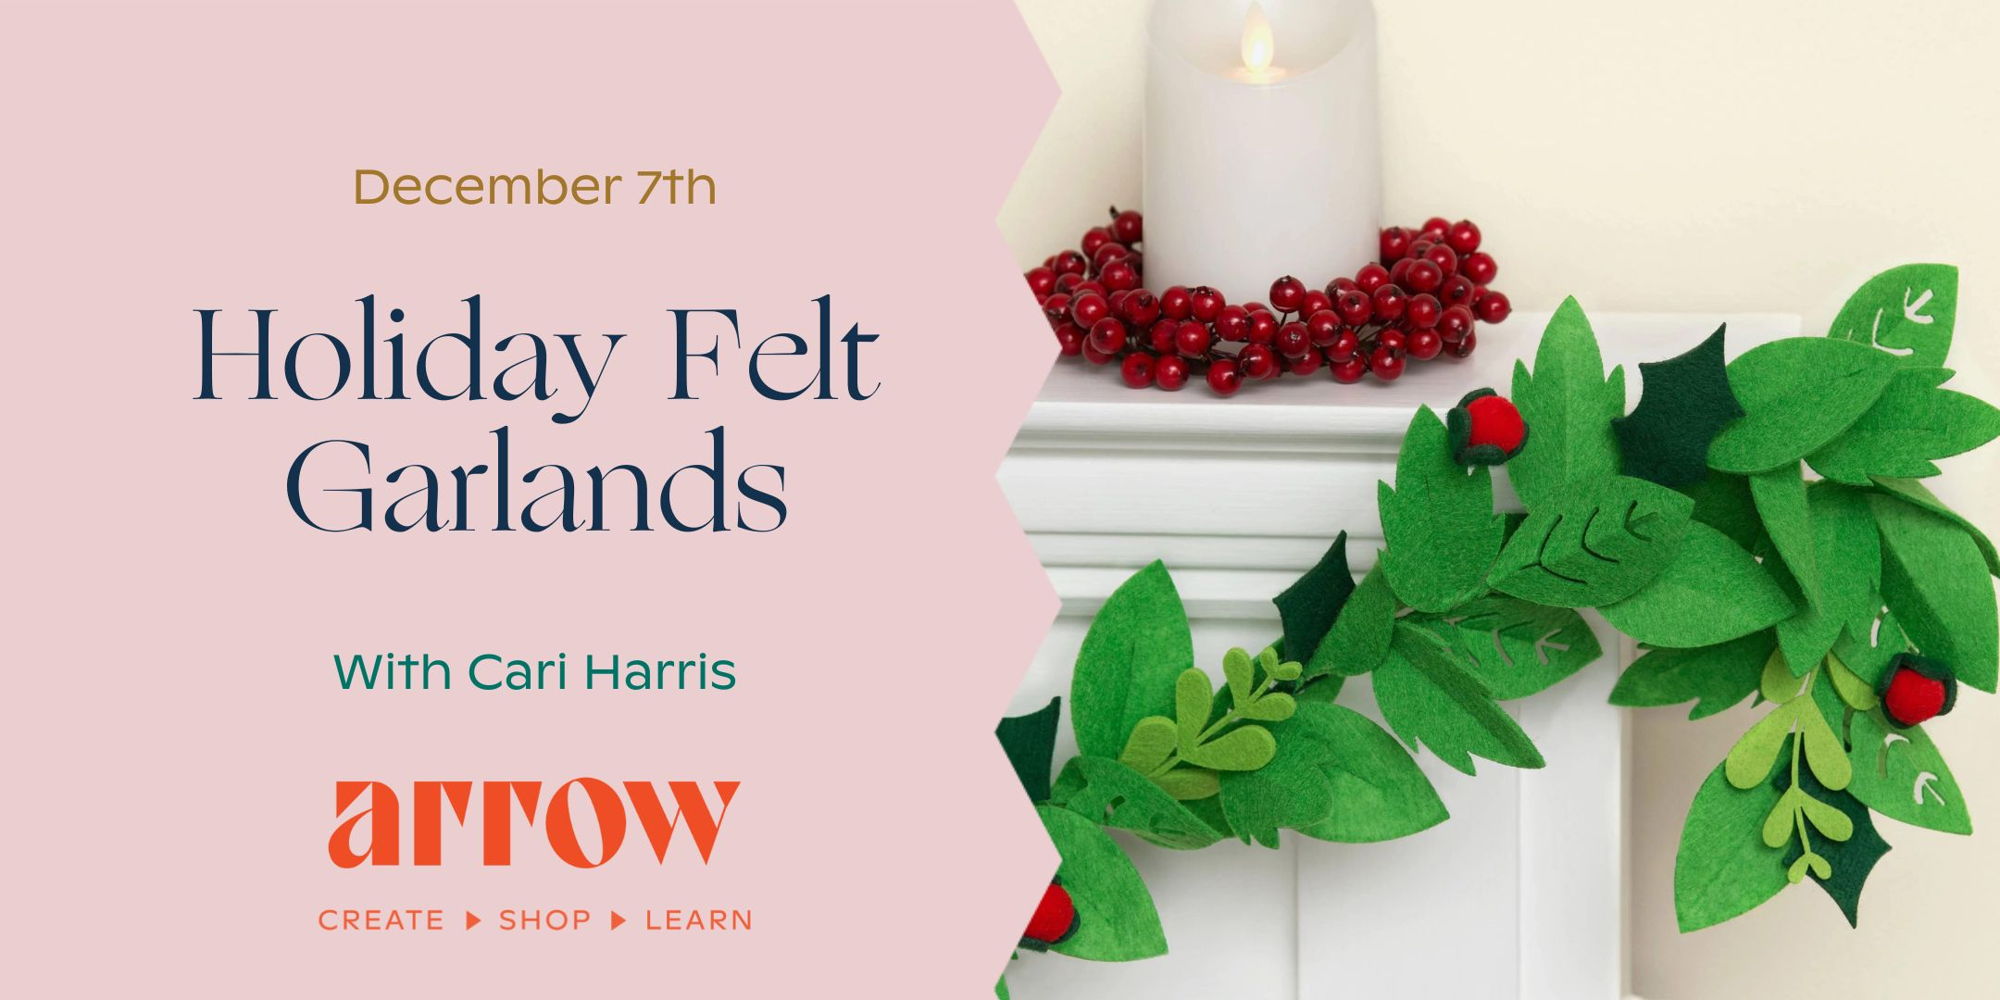 Holiday Felt Garlands with Cari Harris promotional image